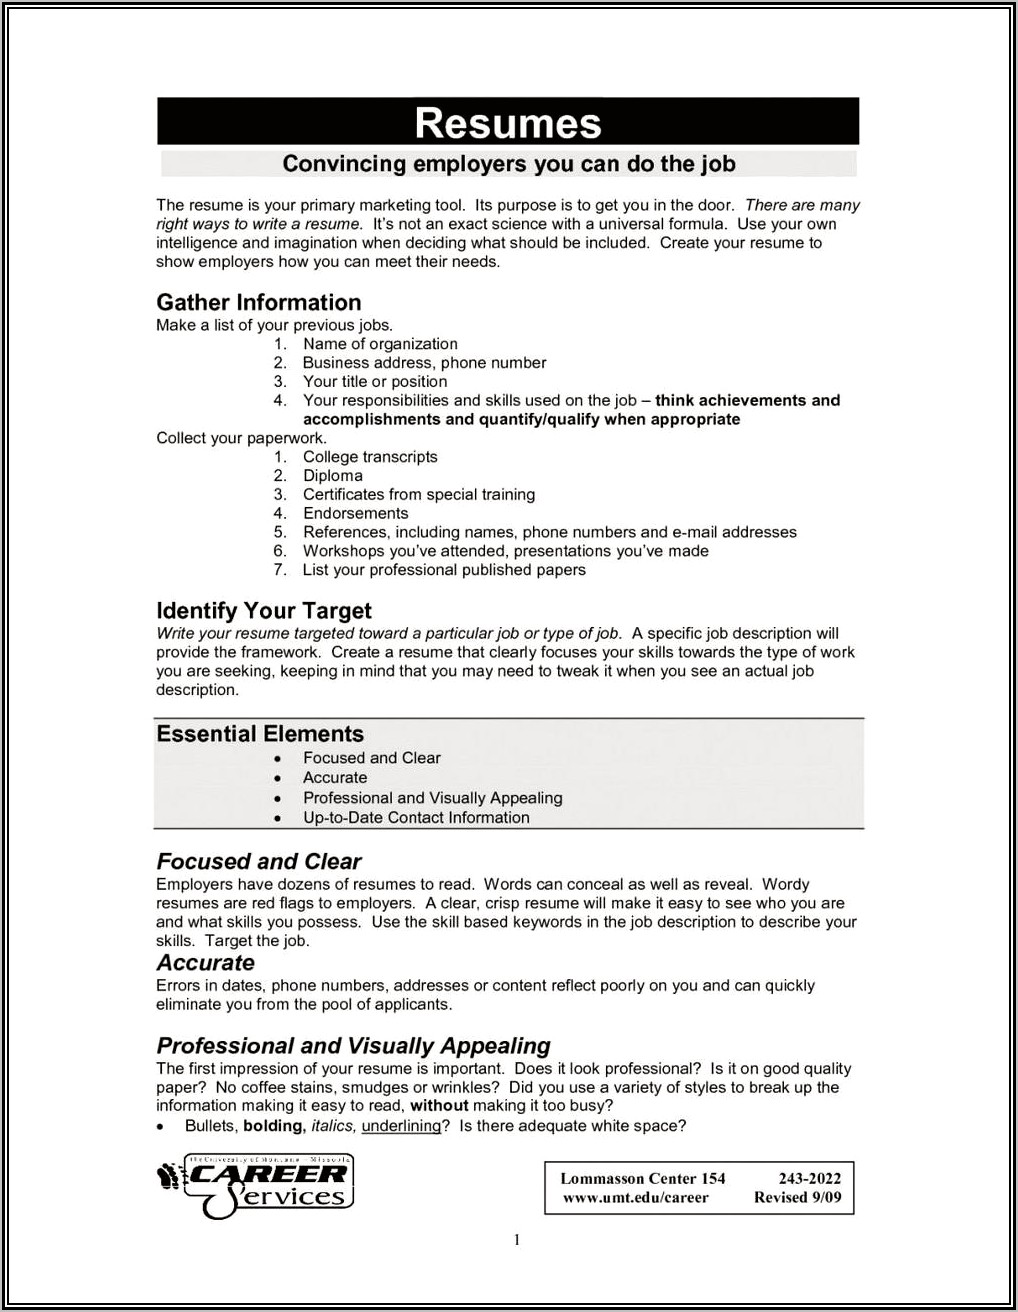 Resume Writing Services Job Description